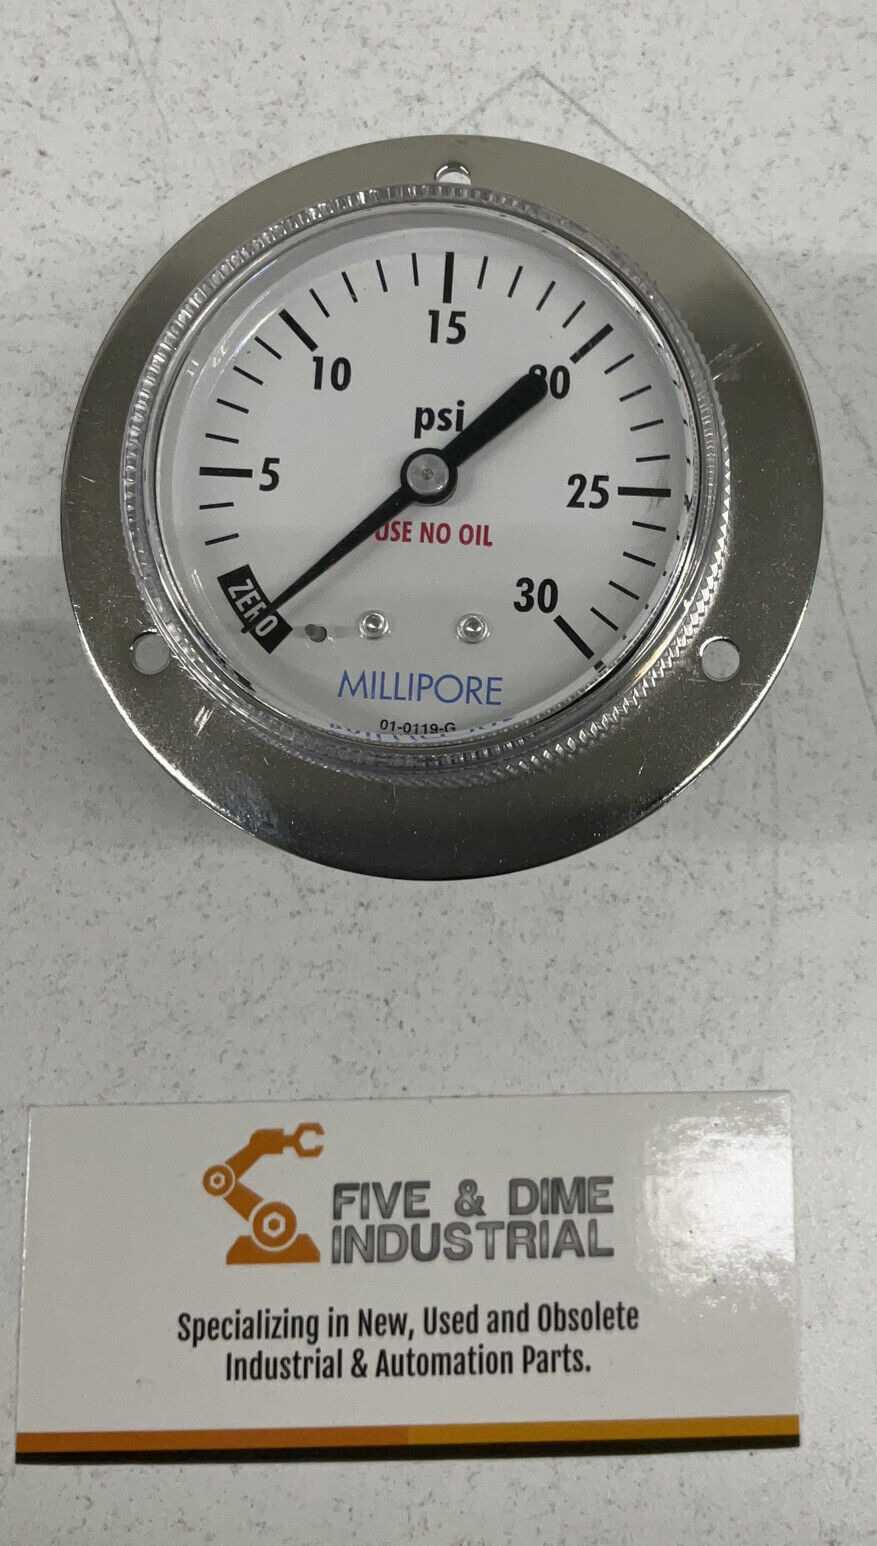 Millpore 01-0119-F 0-30 PSI Pressure Gauge (BL261)